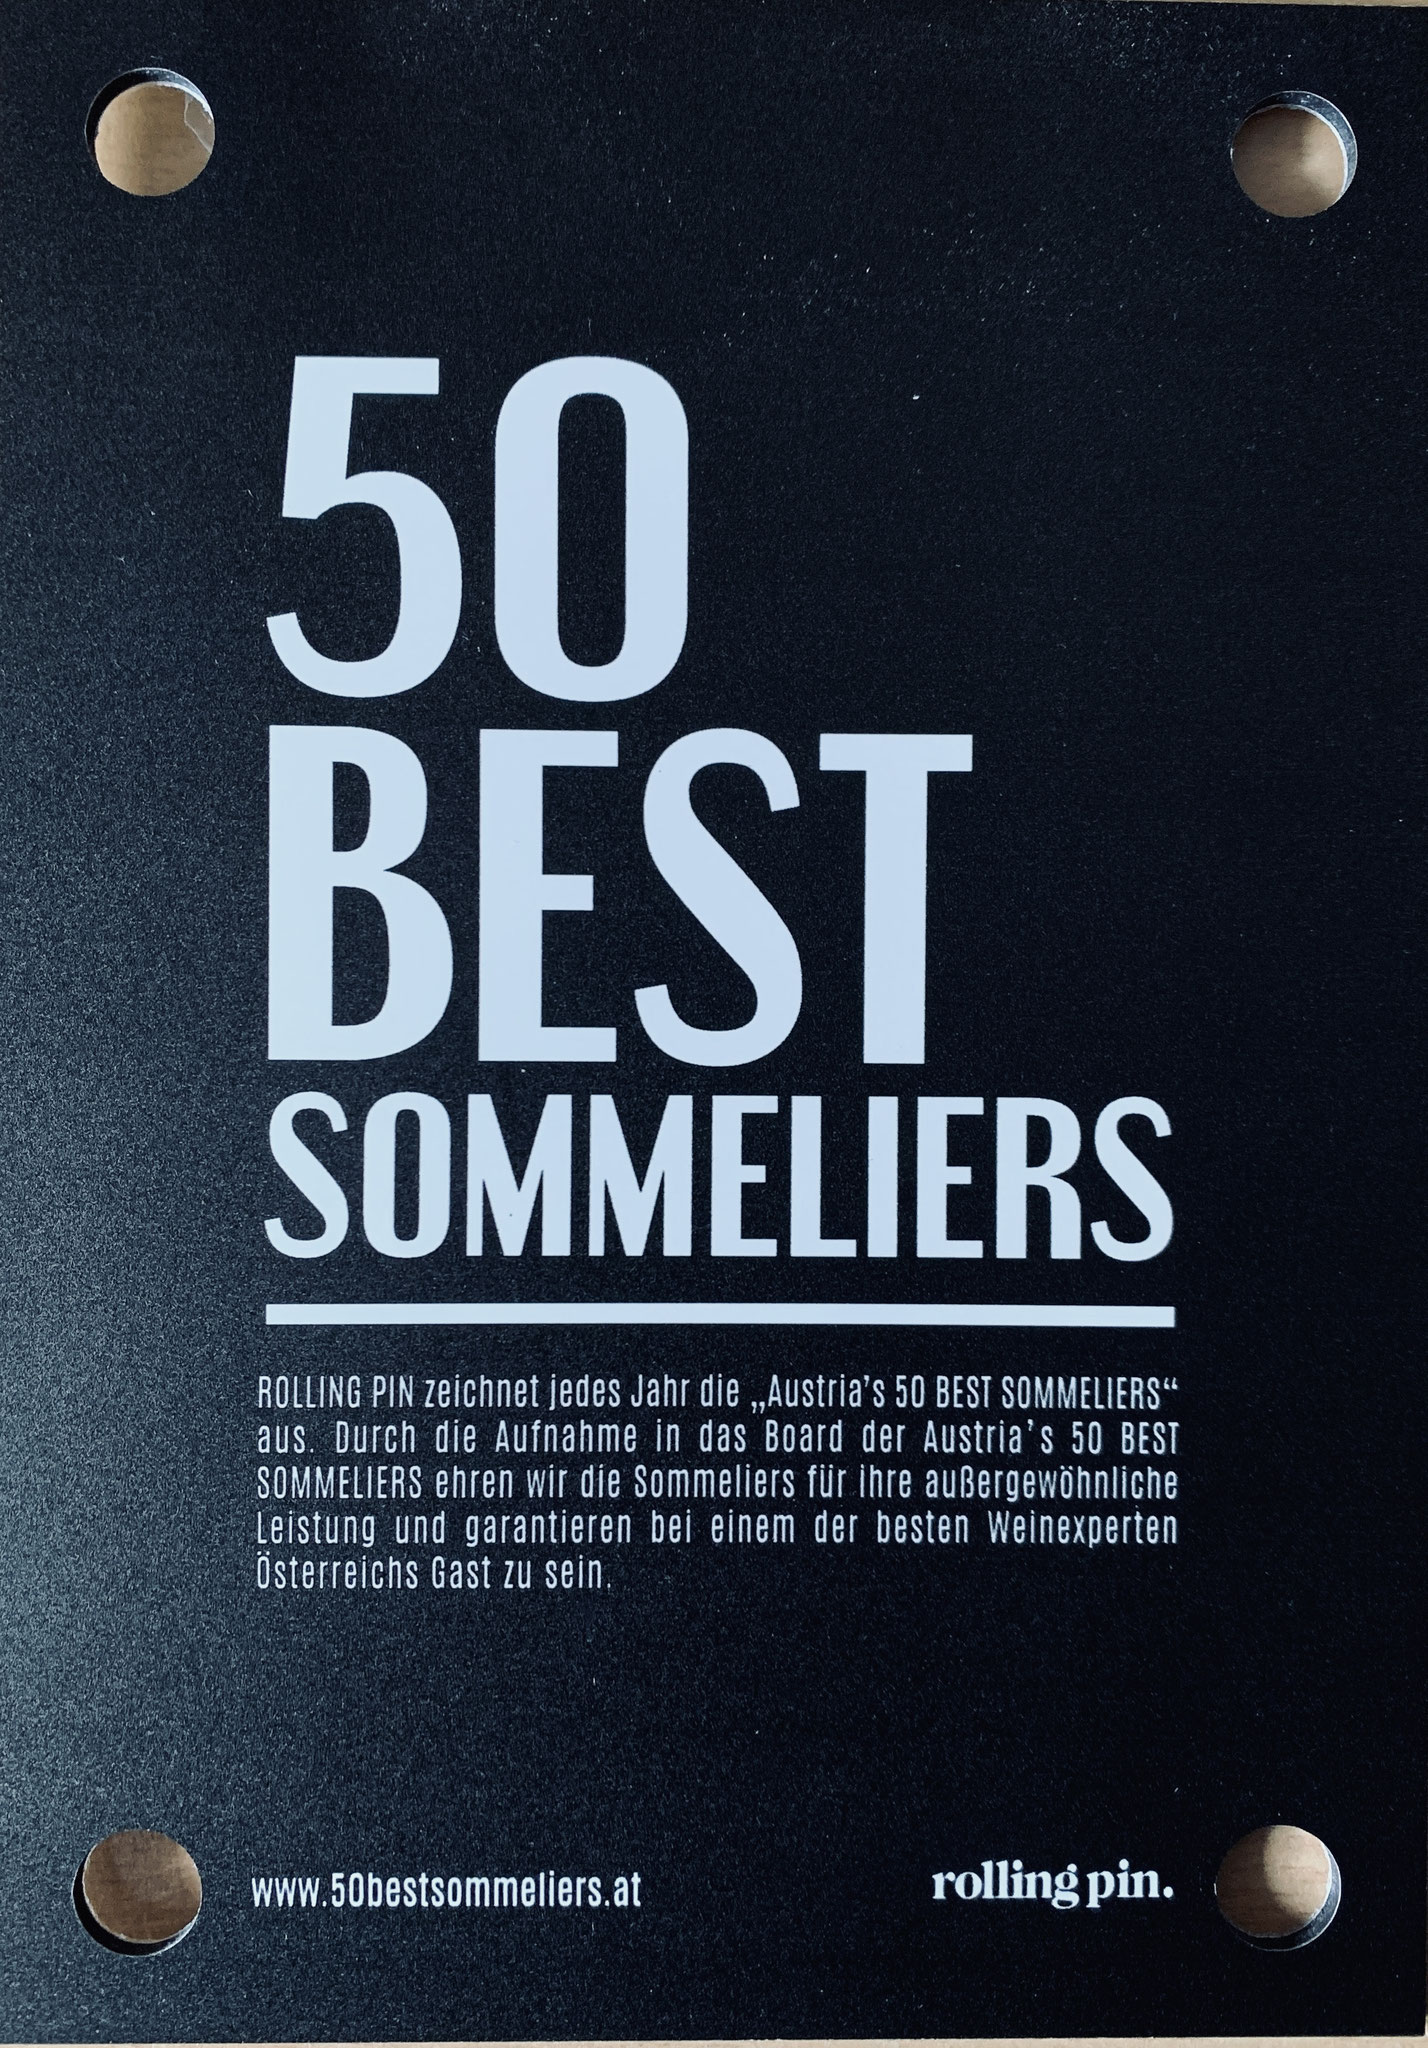 50 Best Sommeliers Rolling Pin 